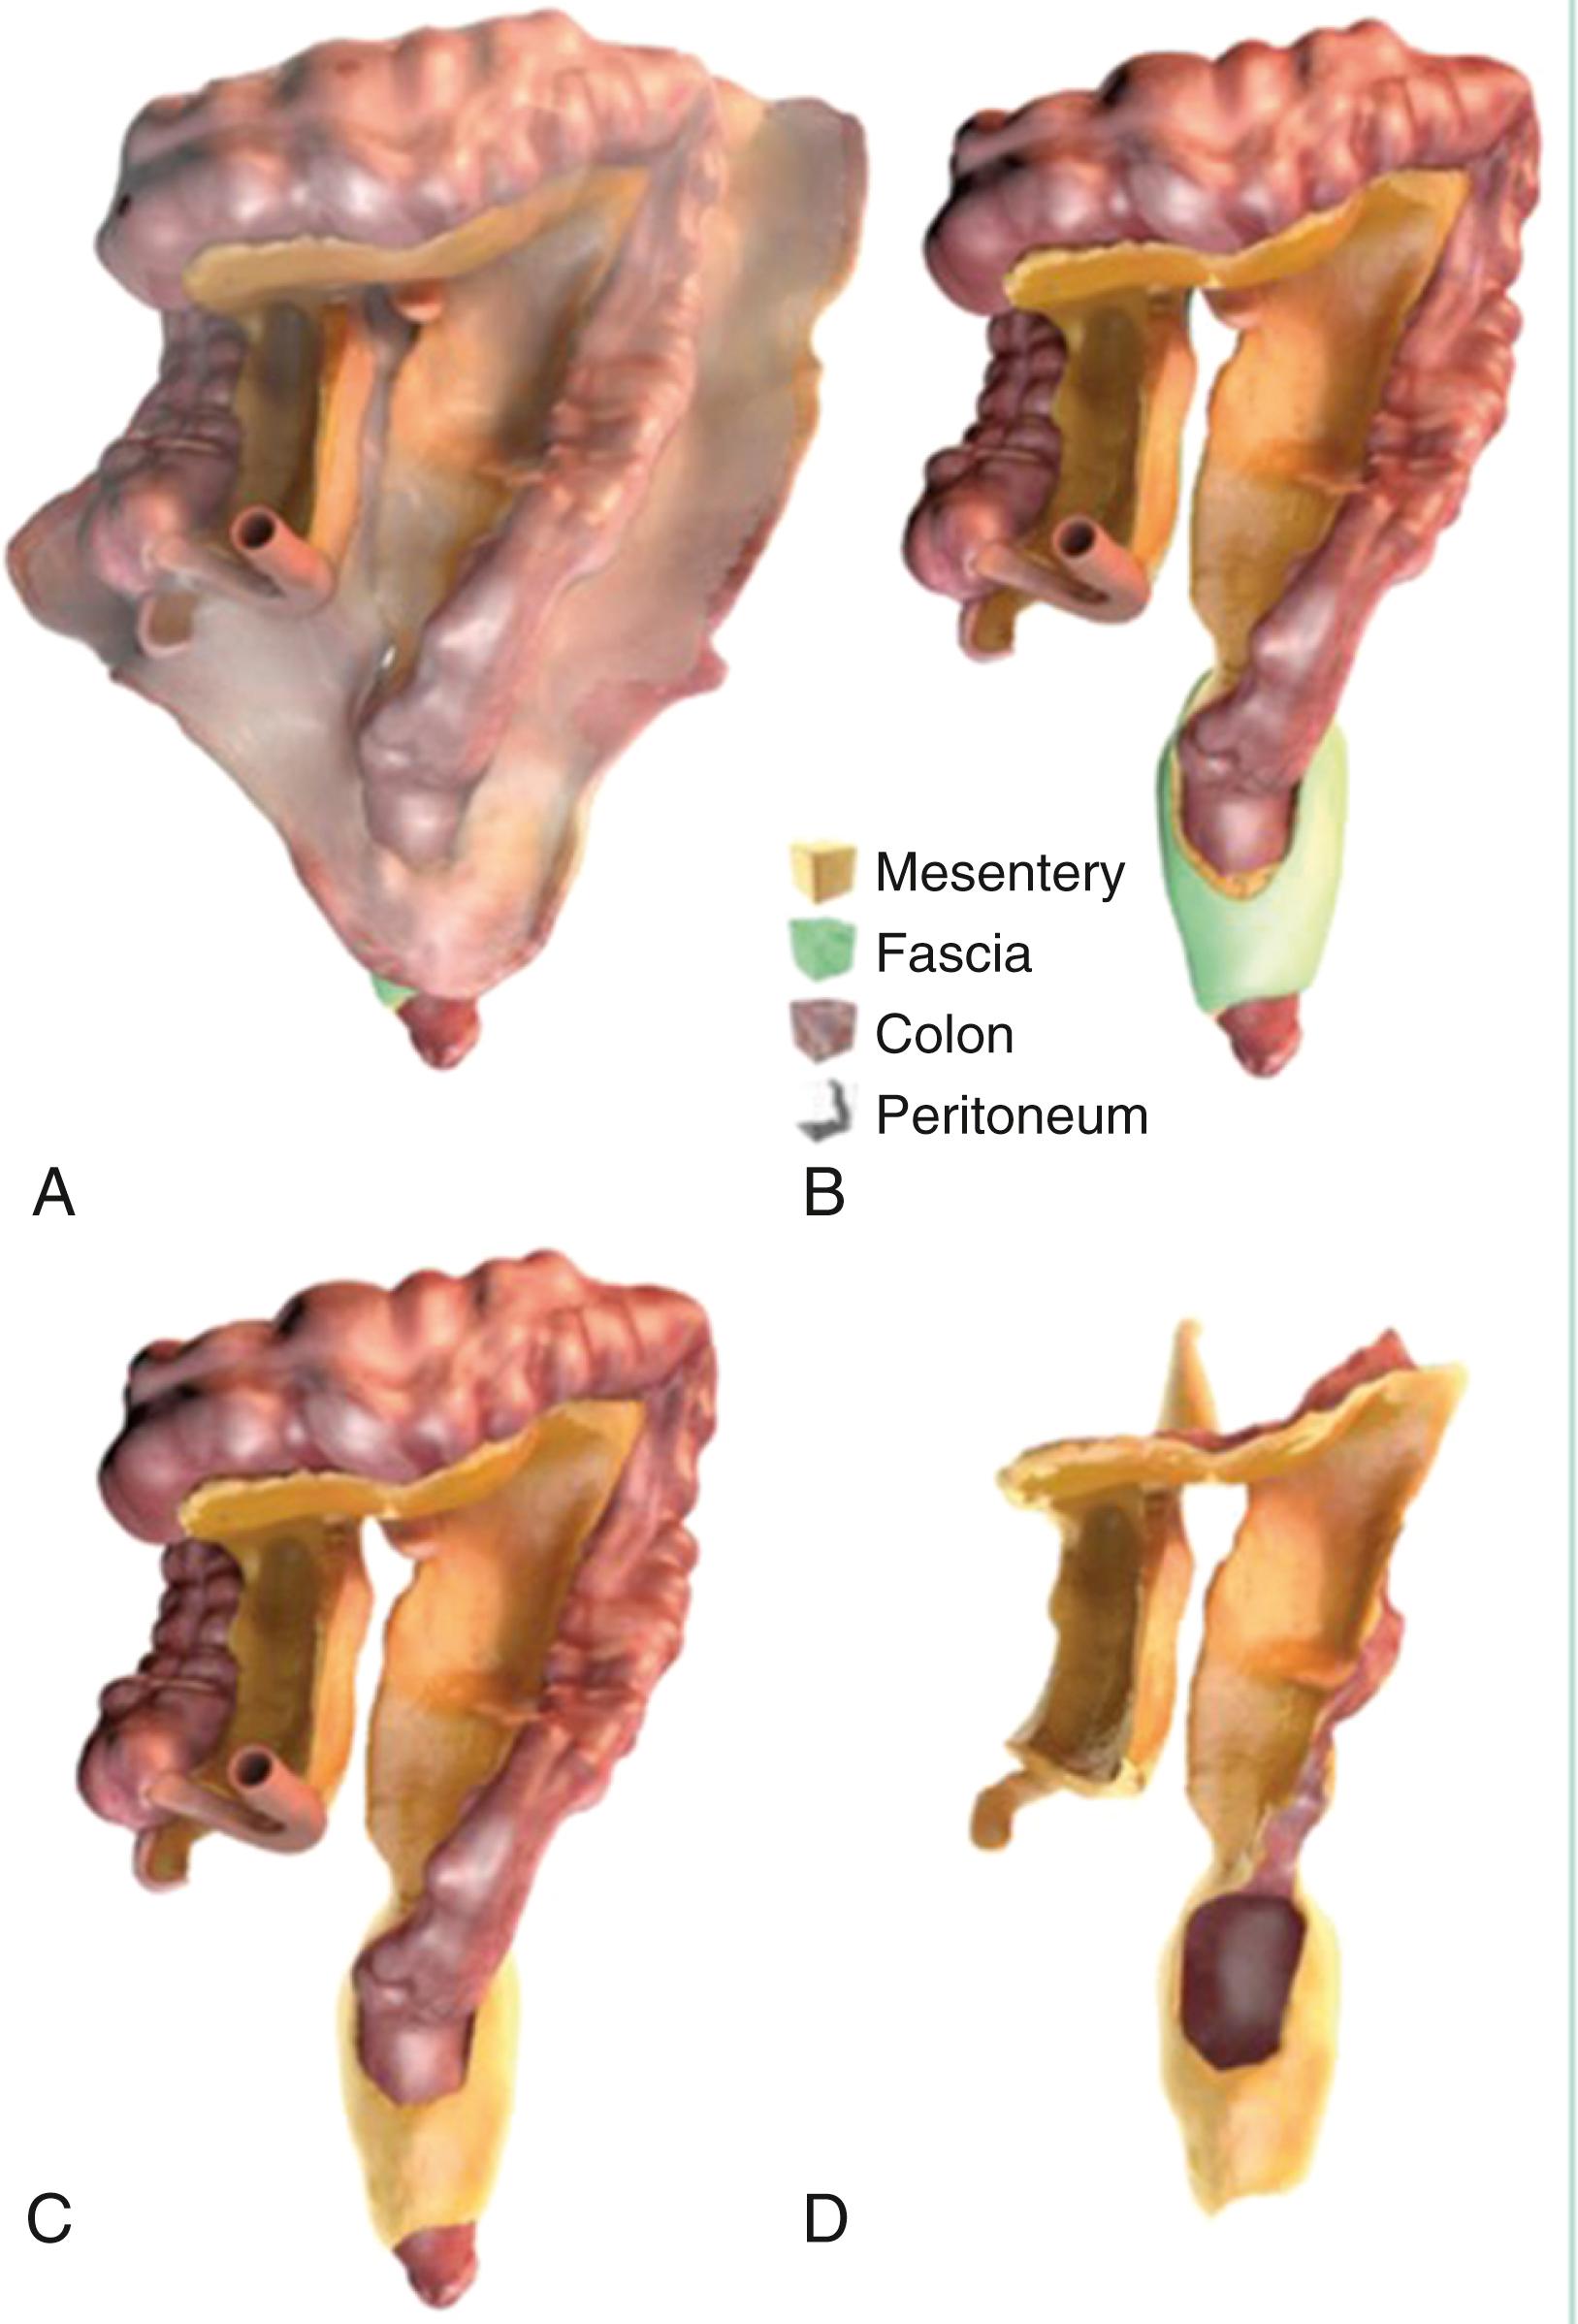 Fig. 39.2, Digital representations of peritoneum, mesentery, fascia, and intestine. A , Peritoneum, mesentery, fascia, and intestine. B , Mesentery, fascia, and intestine. C , Mesentery and intestine. D , Mesentery.